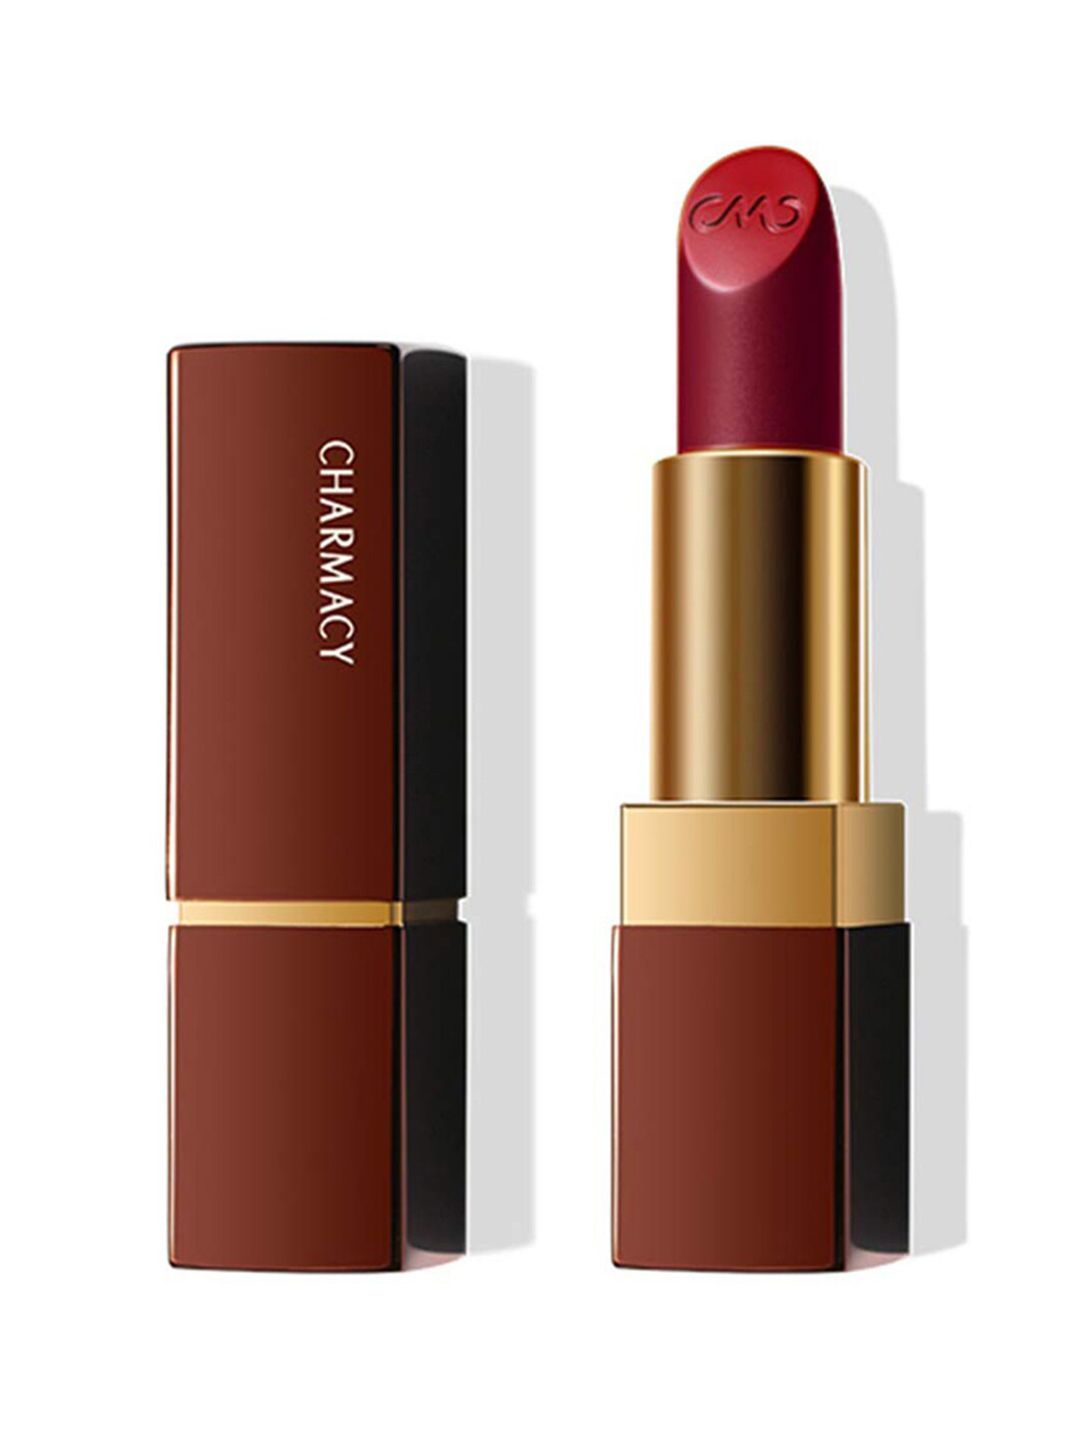 Charmacy Milano Soft Satin Matte Lipstick - Venetian Red 49 Price in India